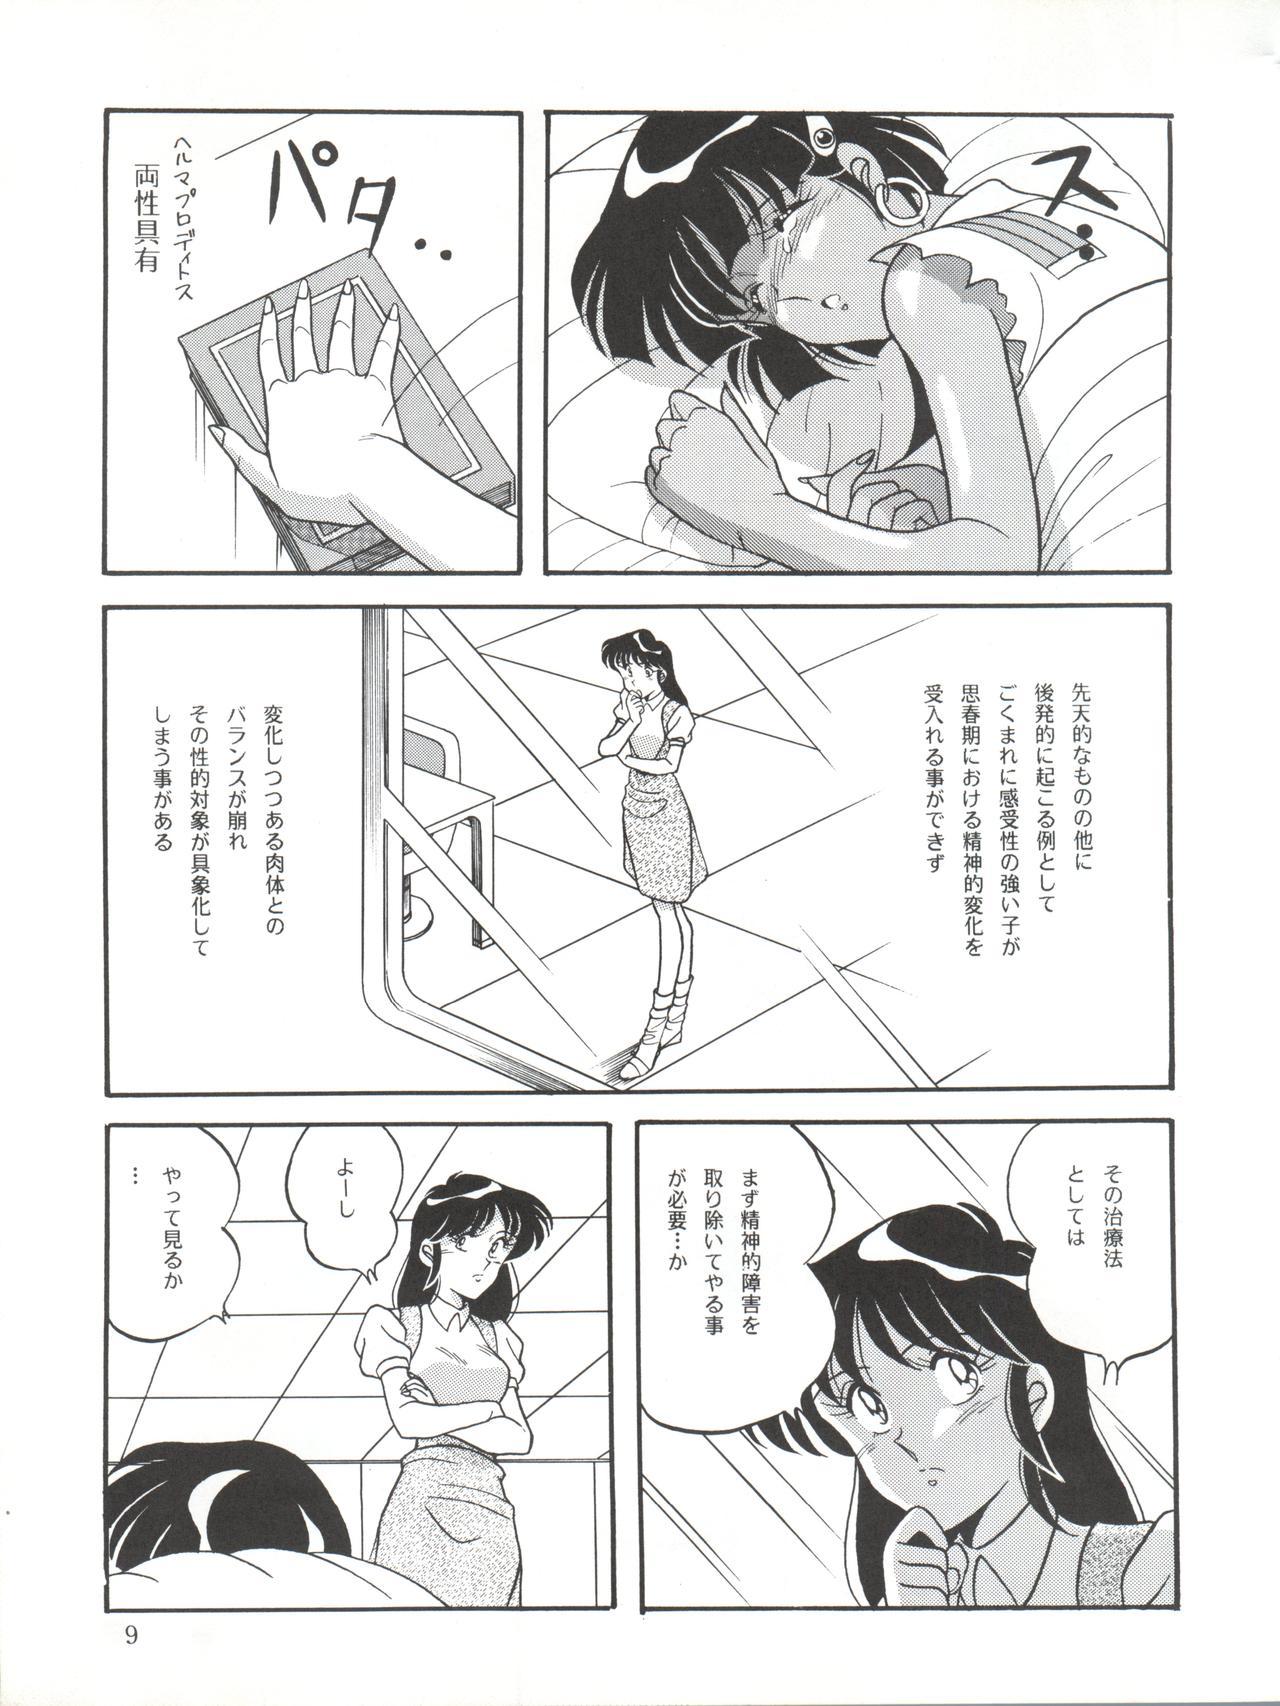 Sextape Vocalization 2 - Fushigi no umi no nadia Spy - Page 9